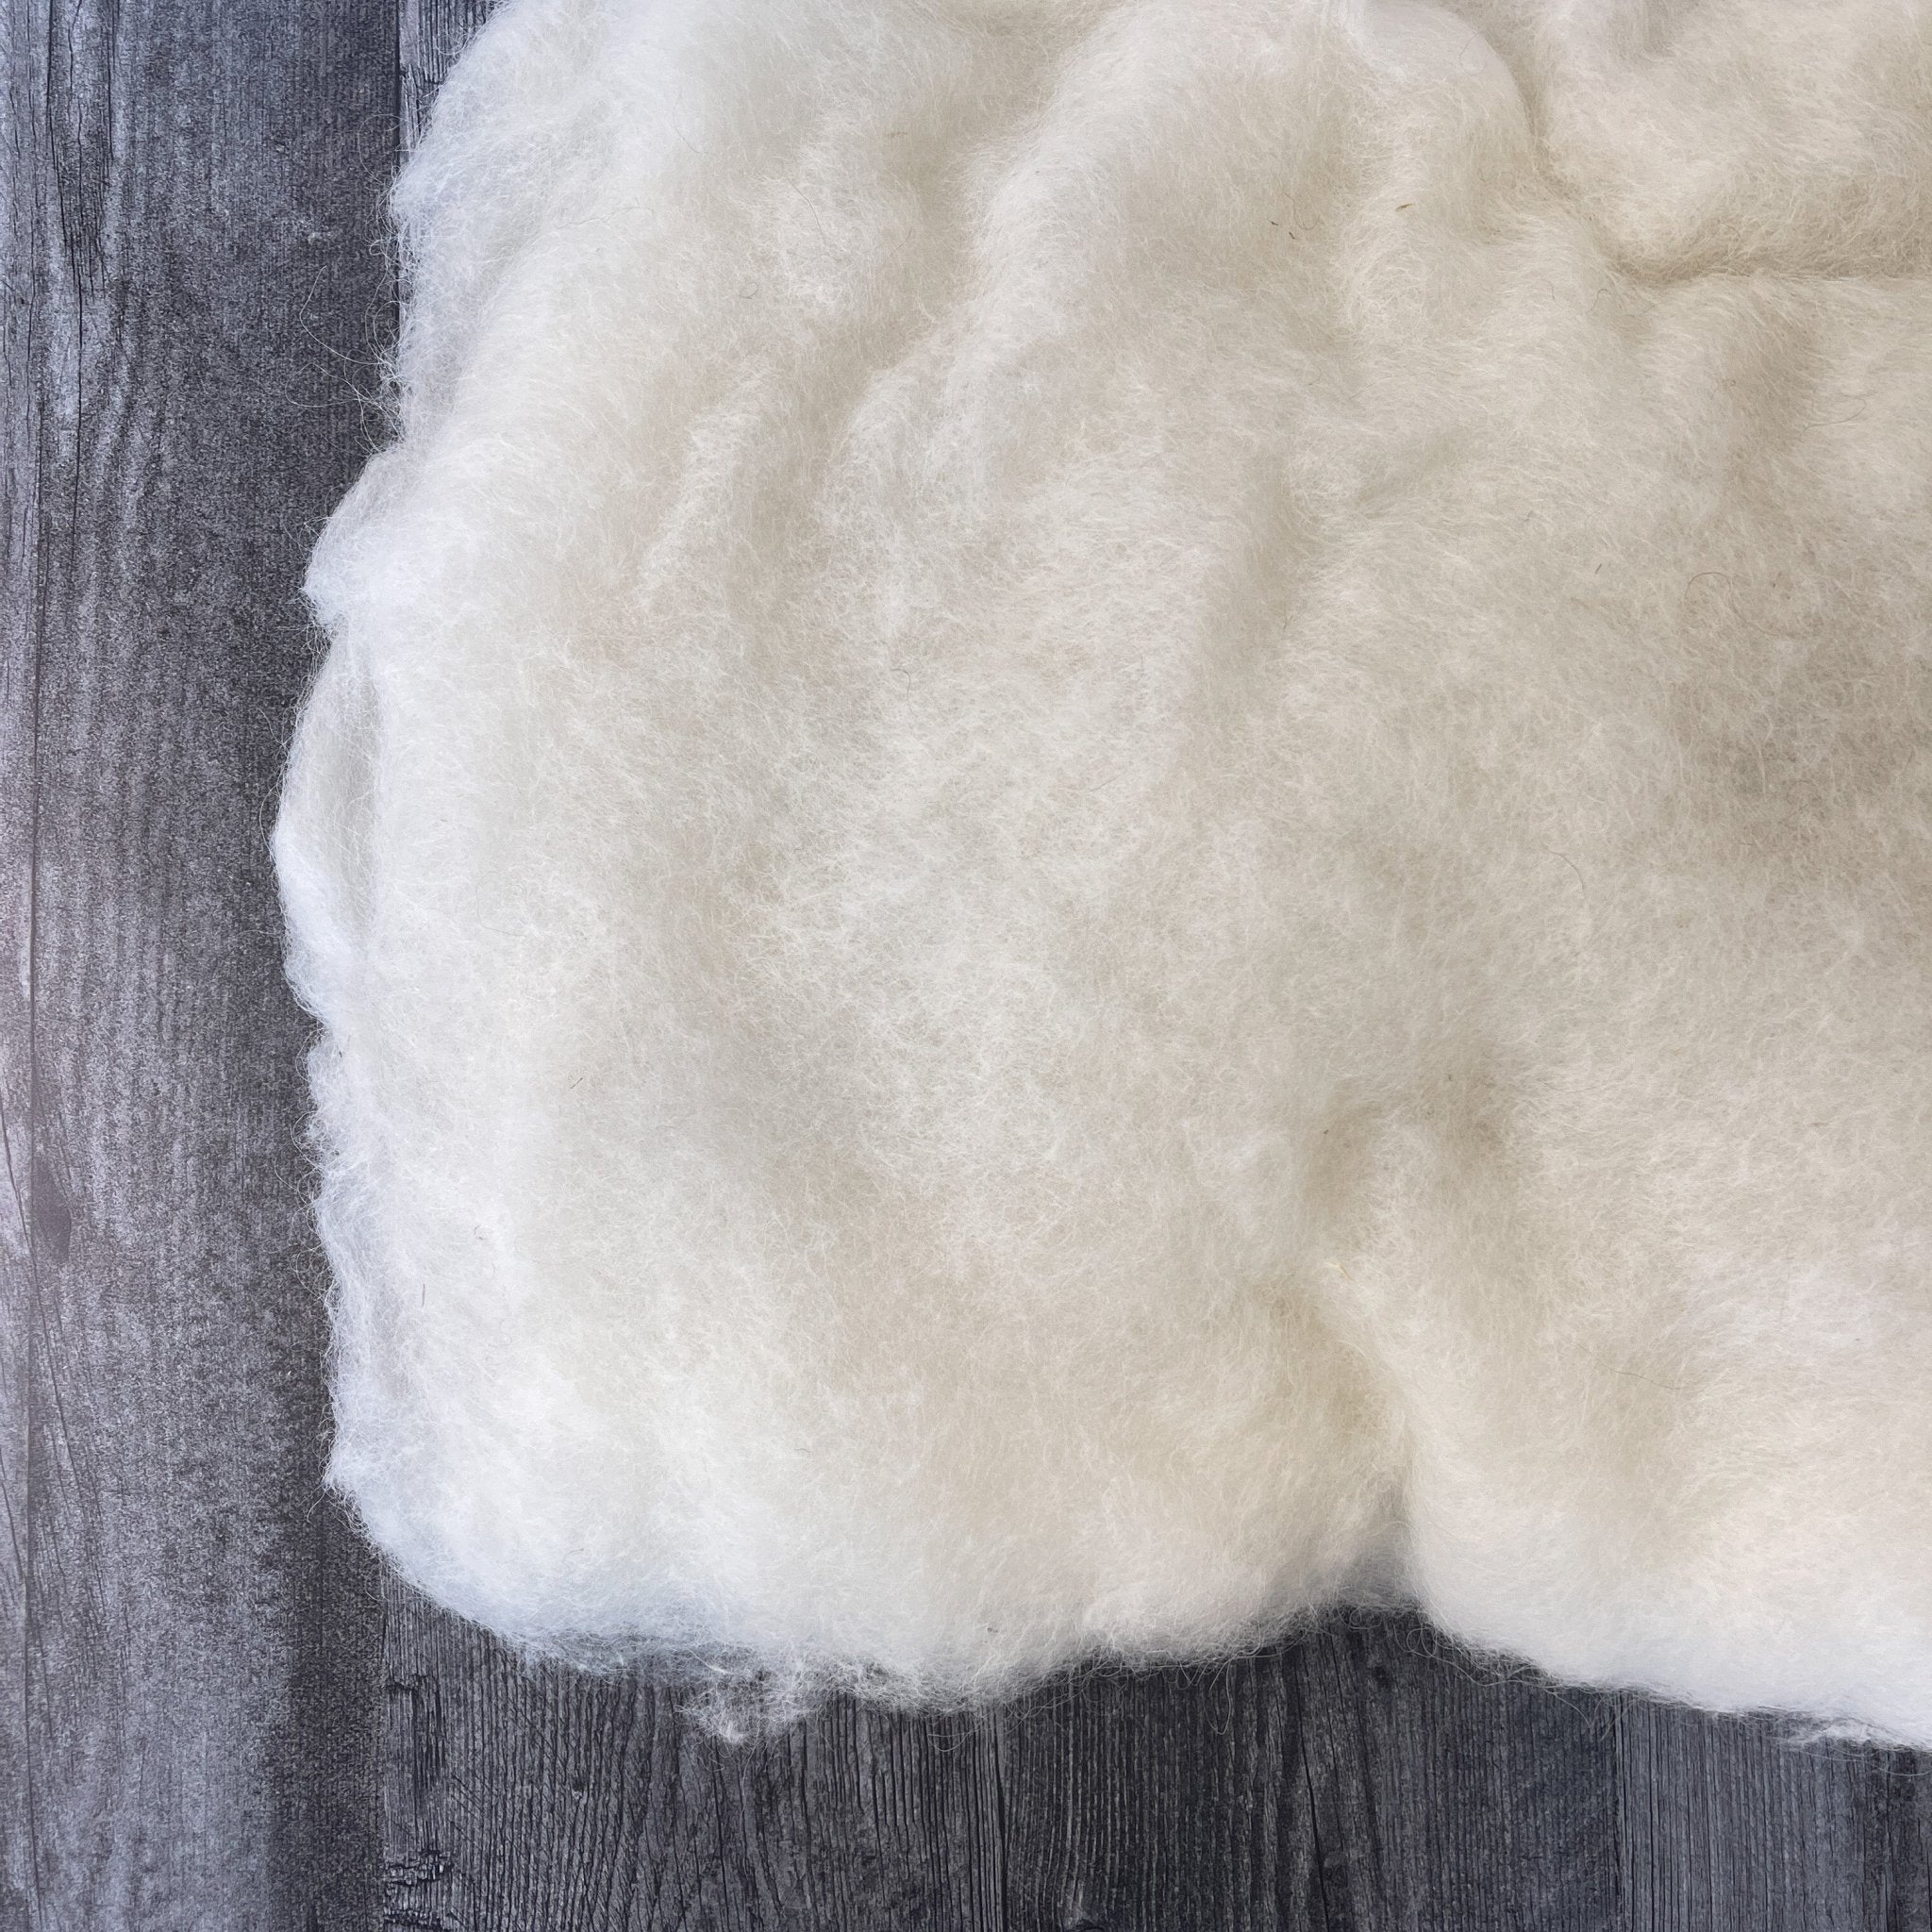 White Batt Montana Icelandic Lamb Wool Batting Natural White 8oz